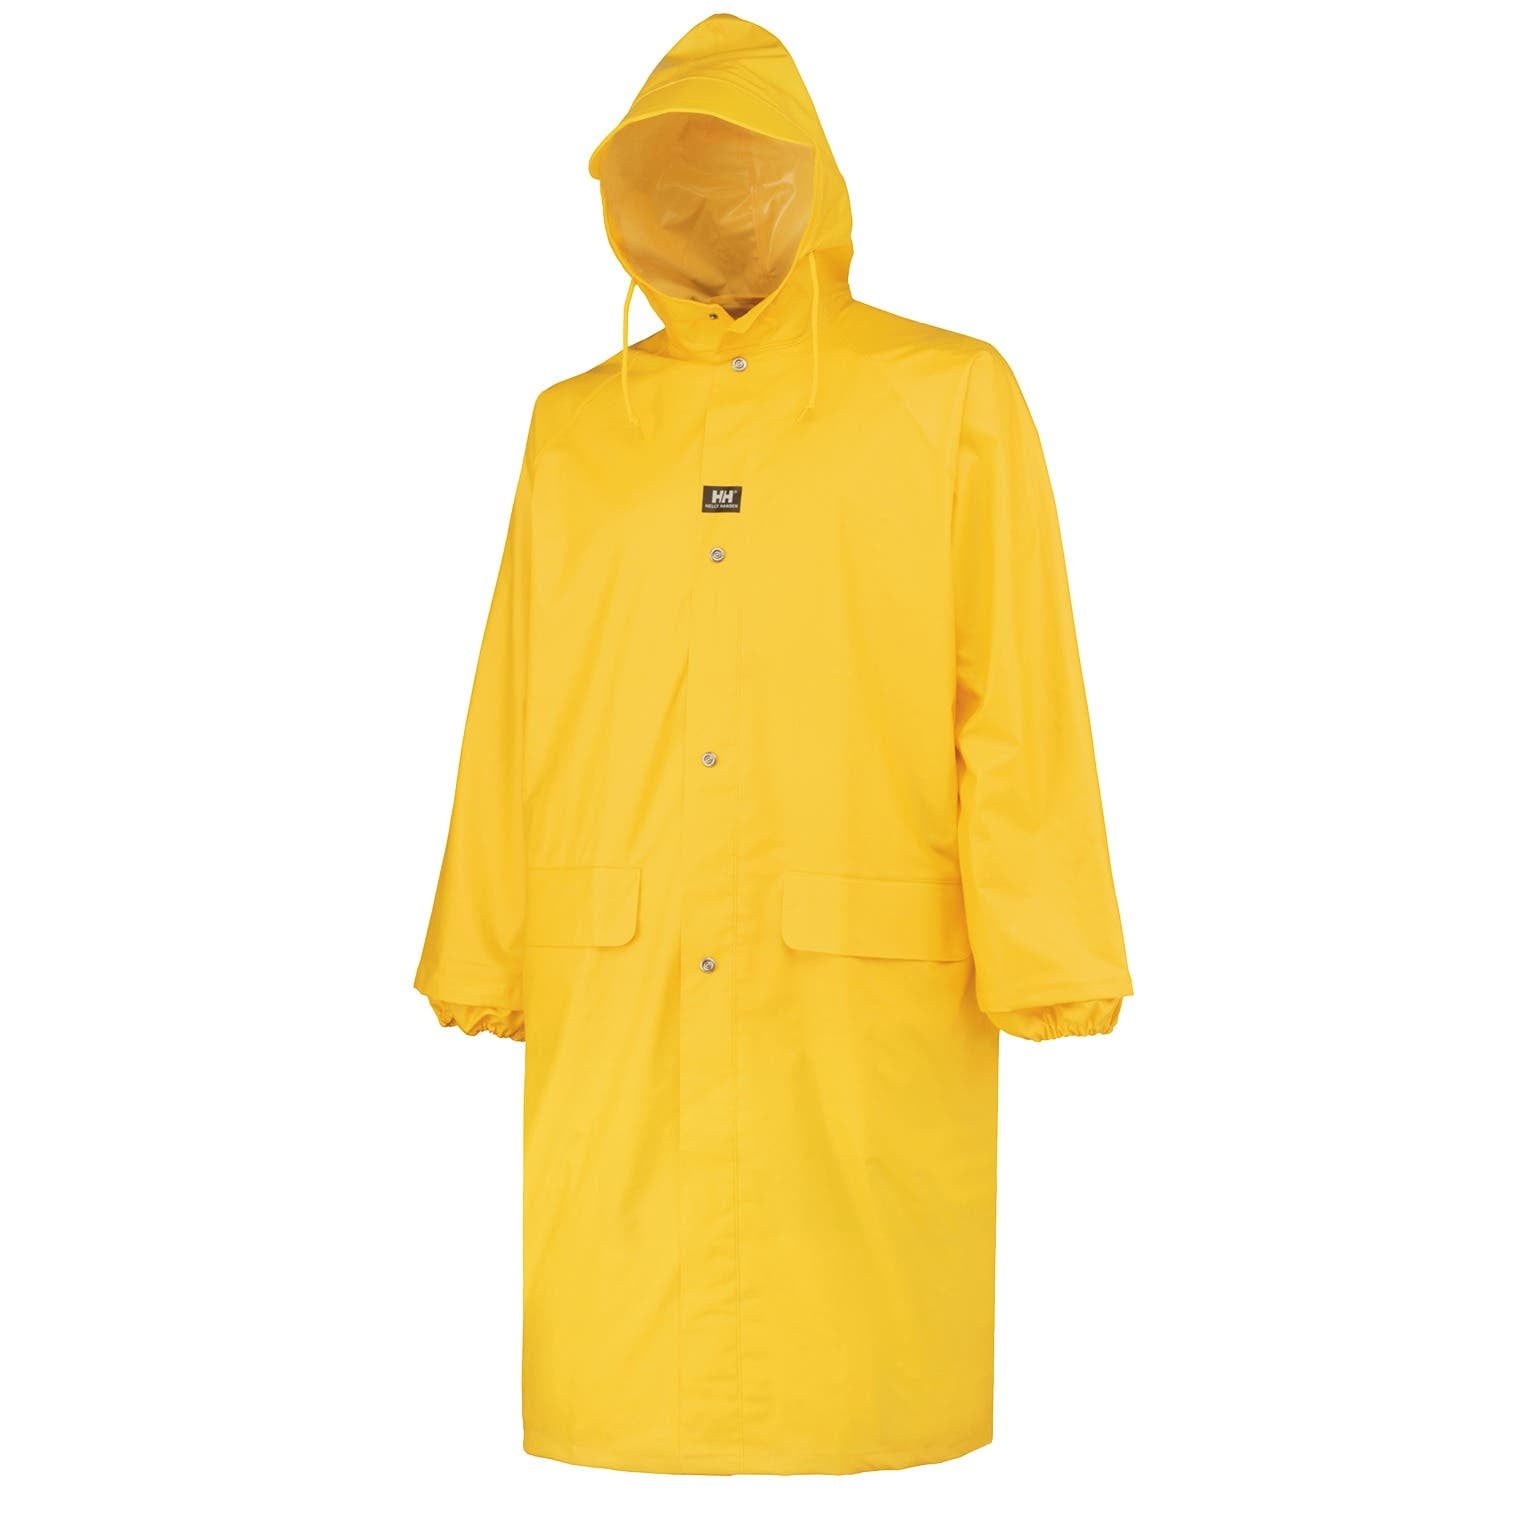 Helly Hansen Men's Woodland Rainwear Coat in Light Yellow from the front